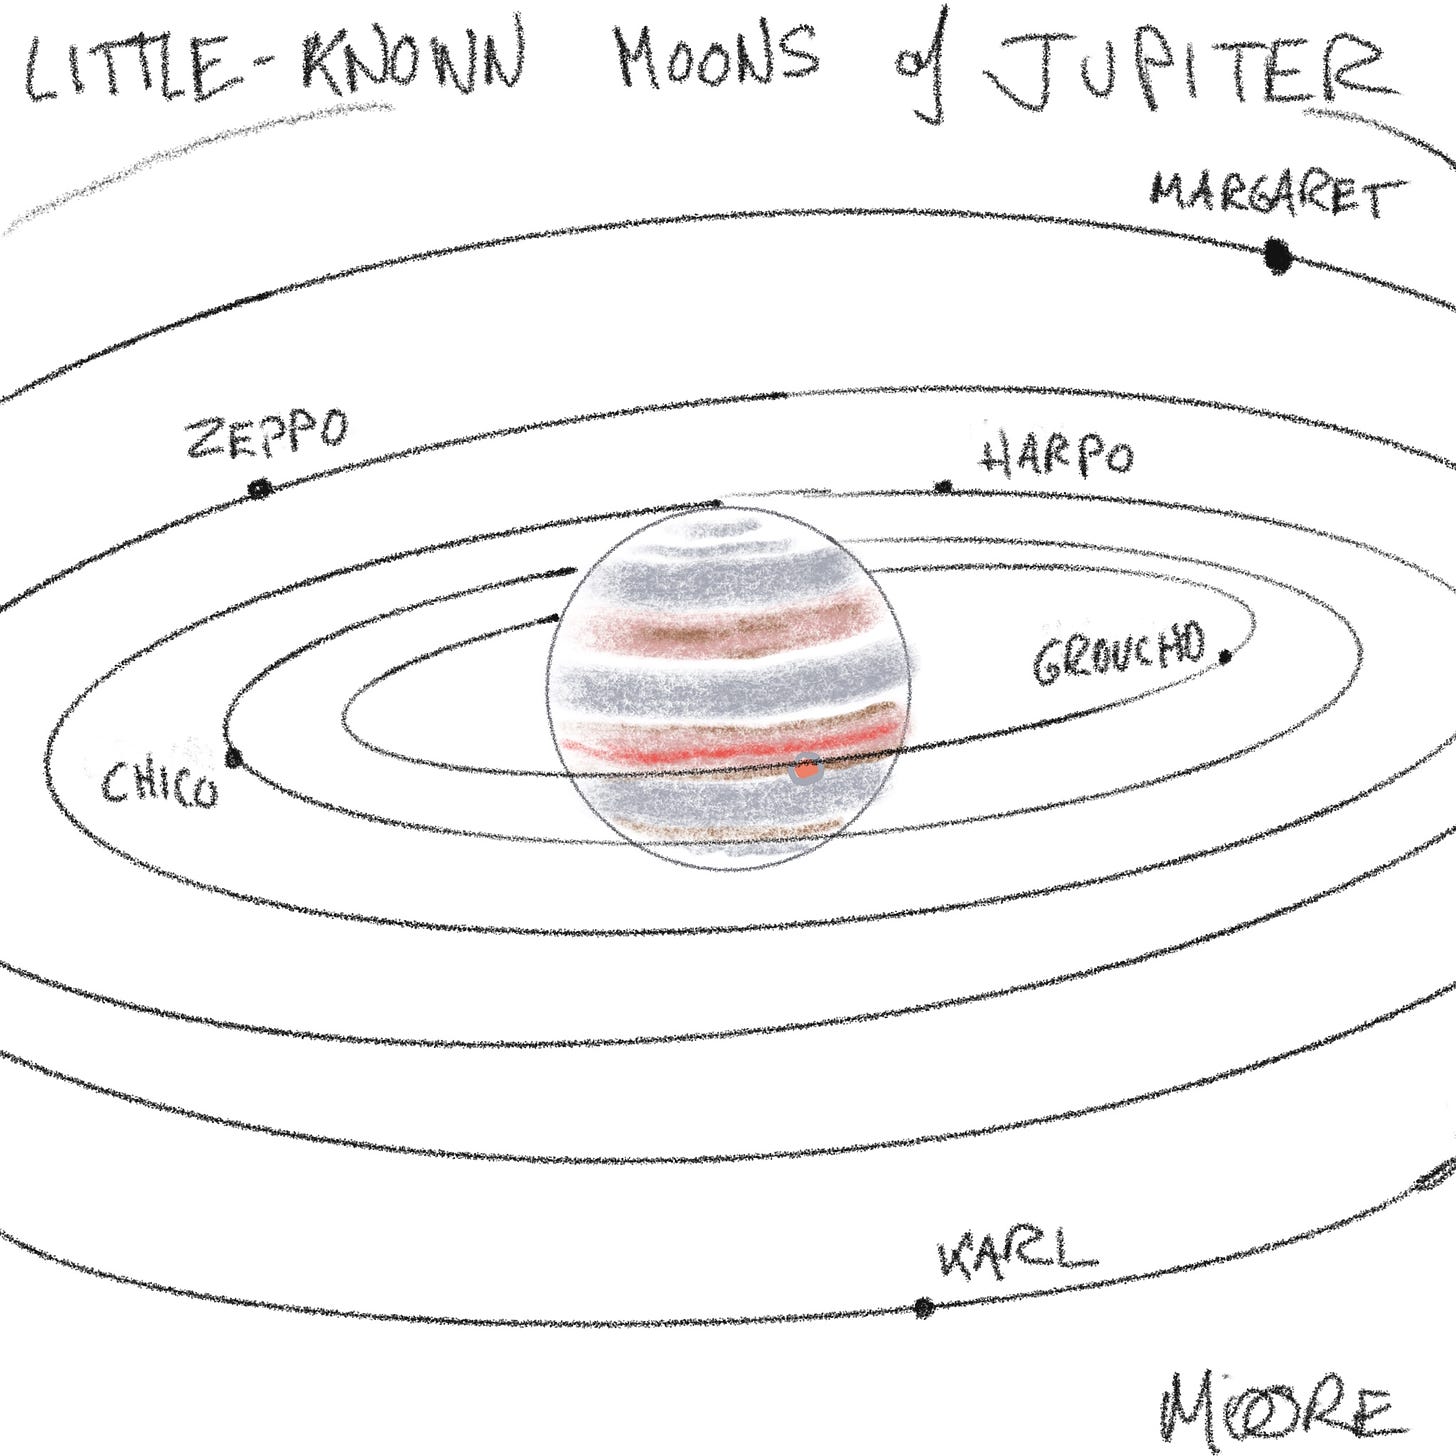 Little-known moons of Jupiter